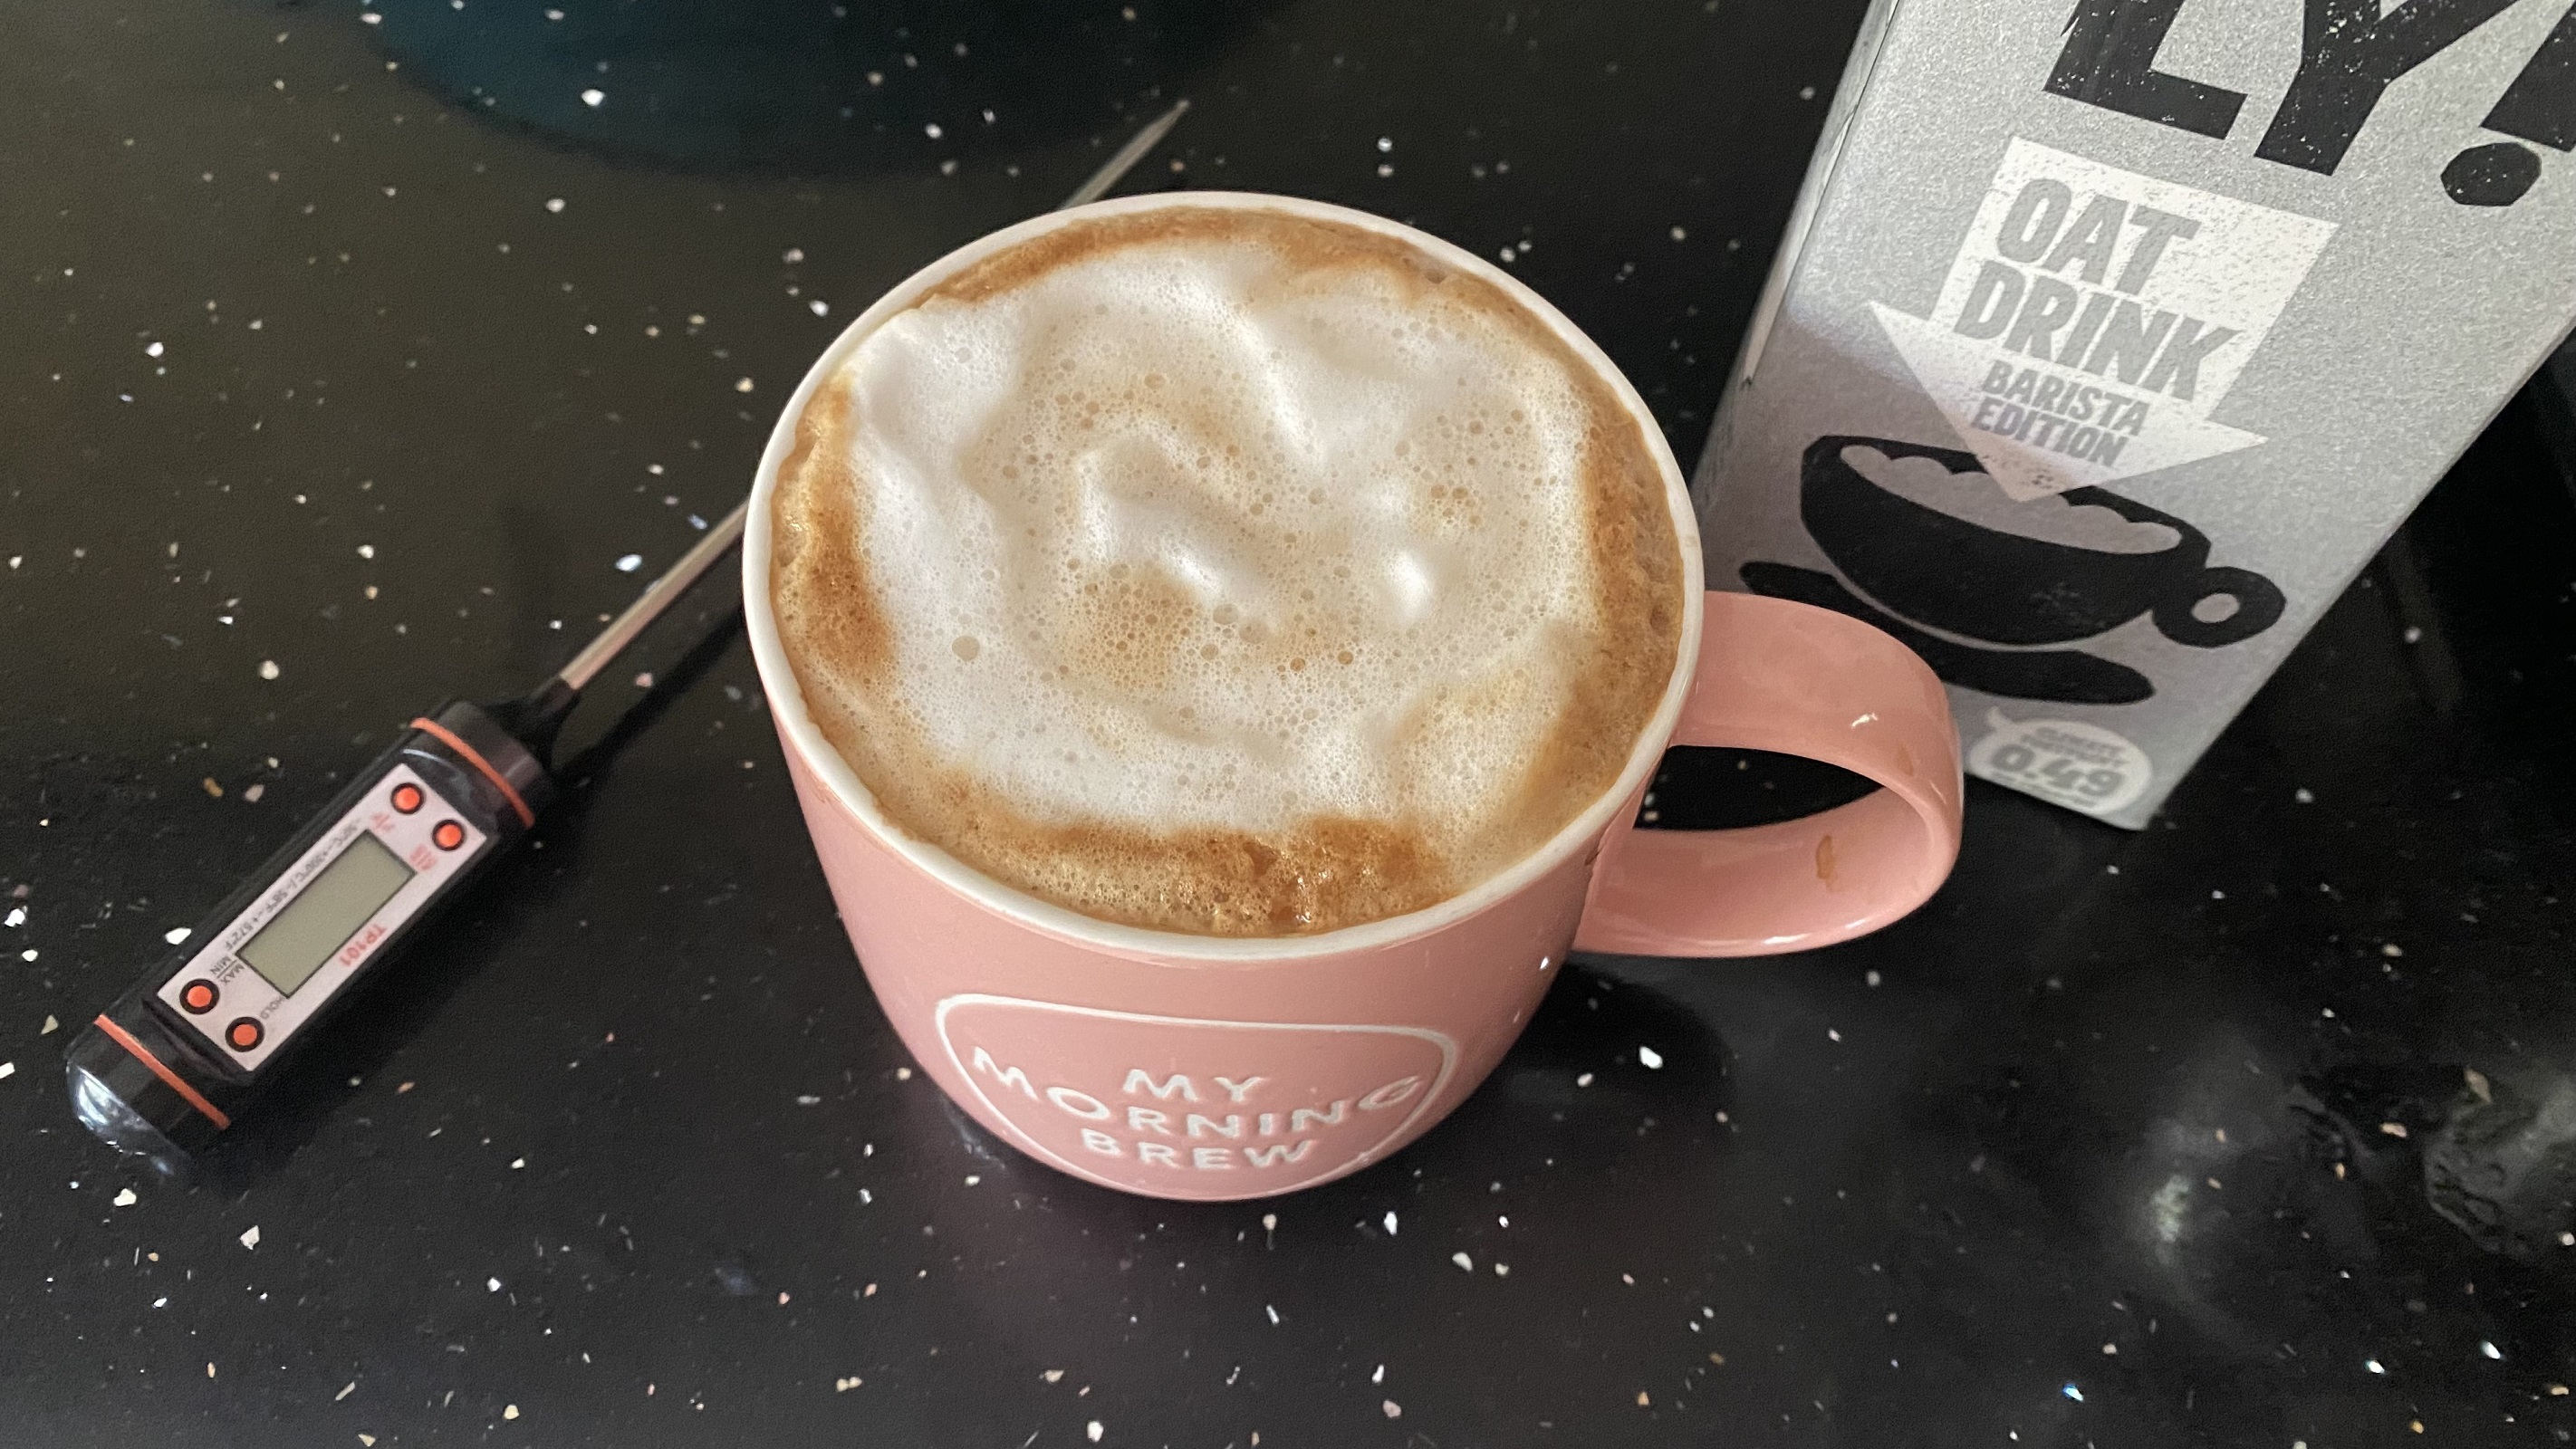 Breville Barista Express Impress creating foam on a cappuccino